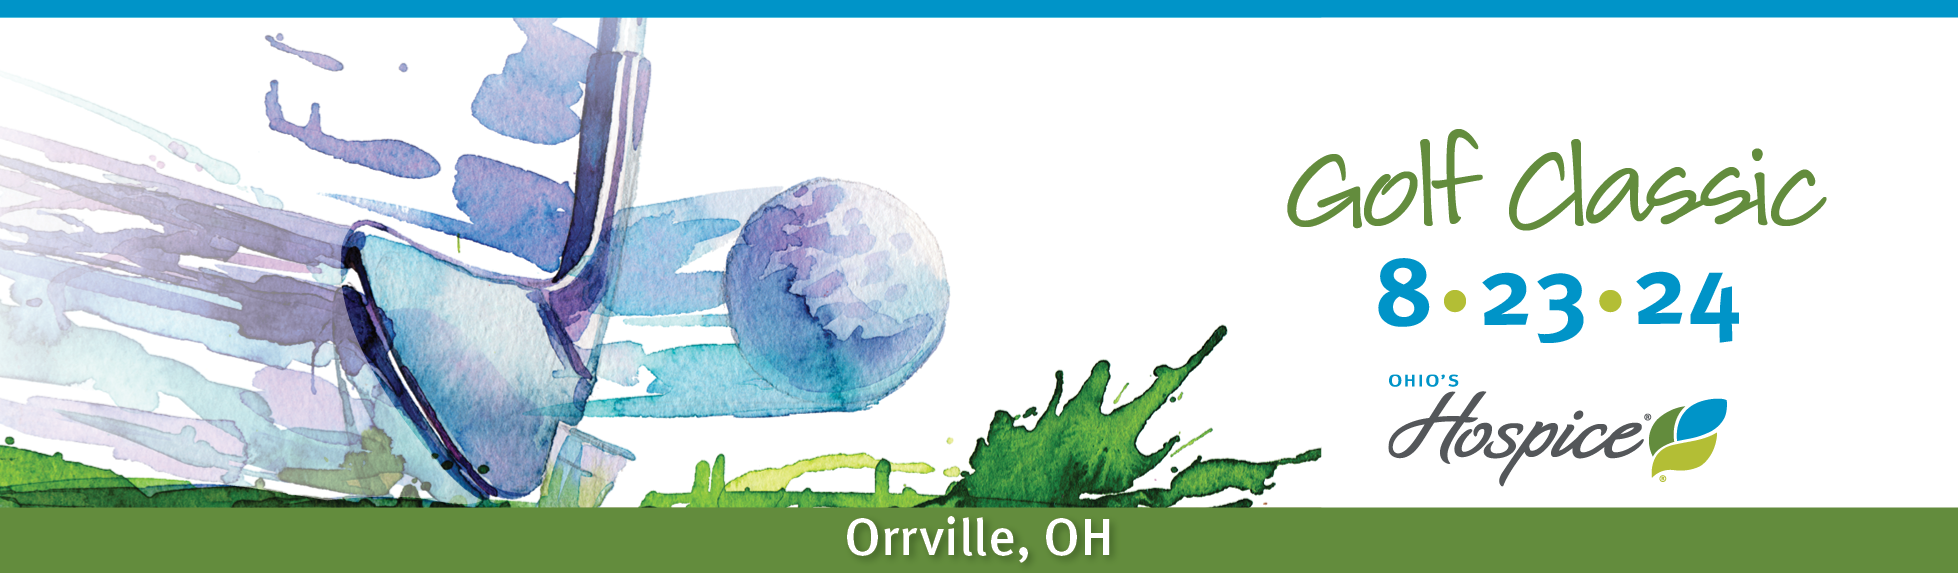 Ohio's Hospice LifeCare 2024 Golf Classic 8.23.24 Orrville, OH